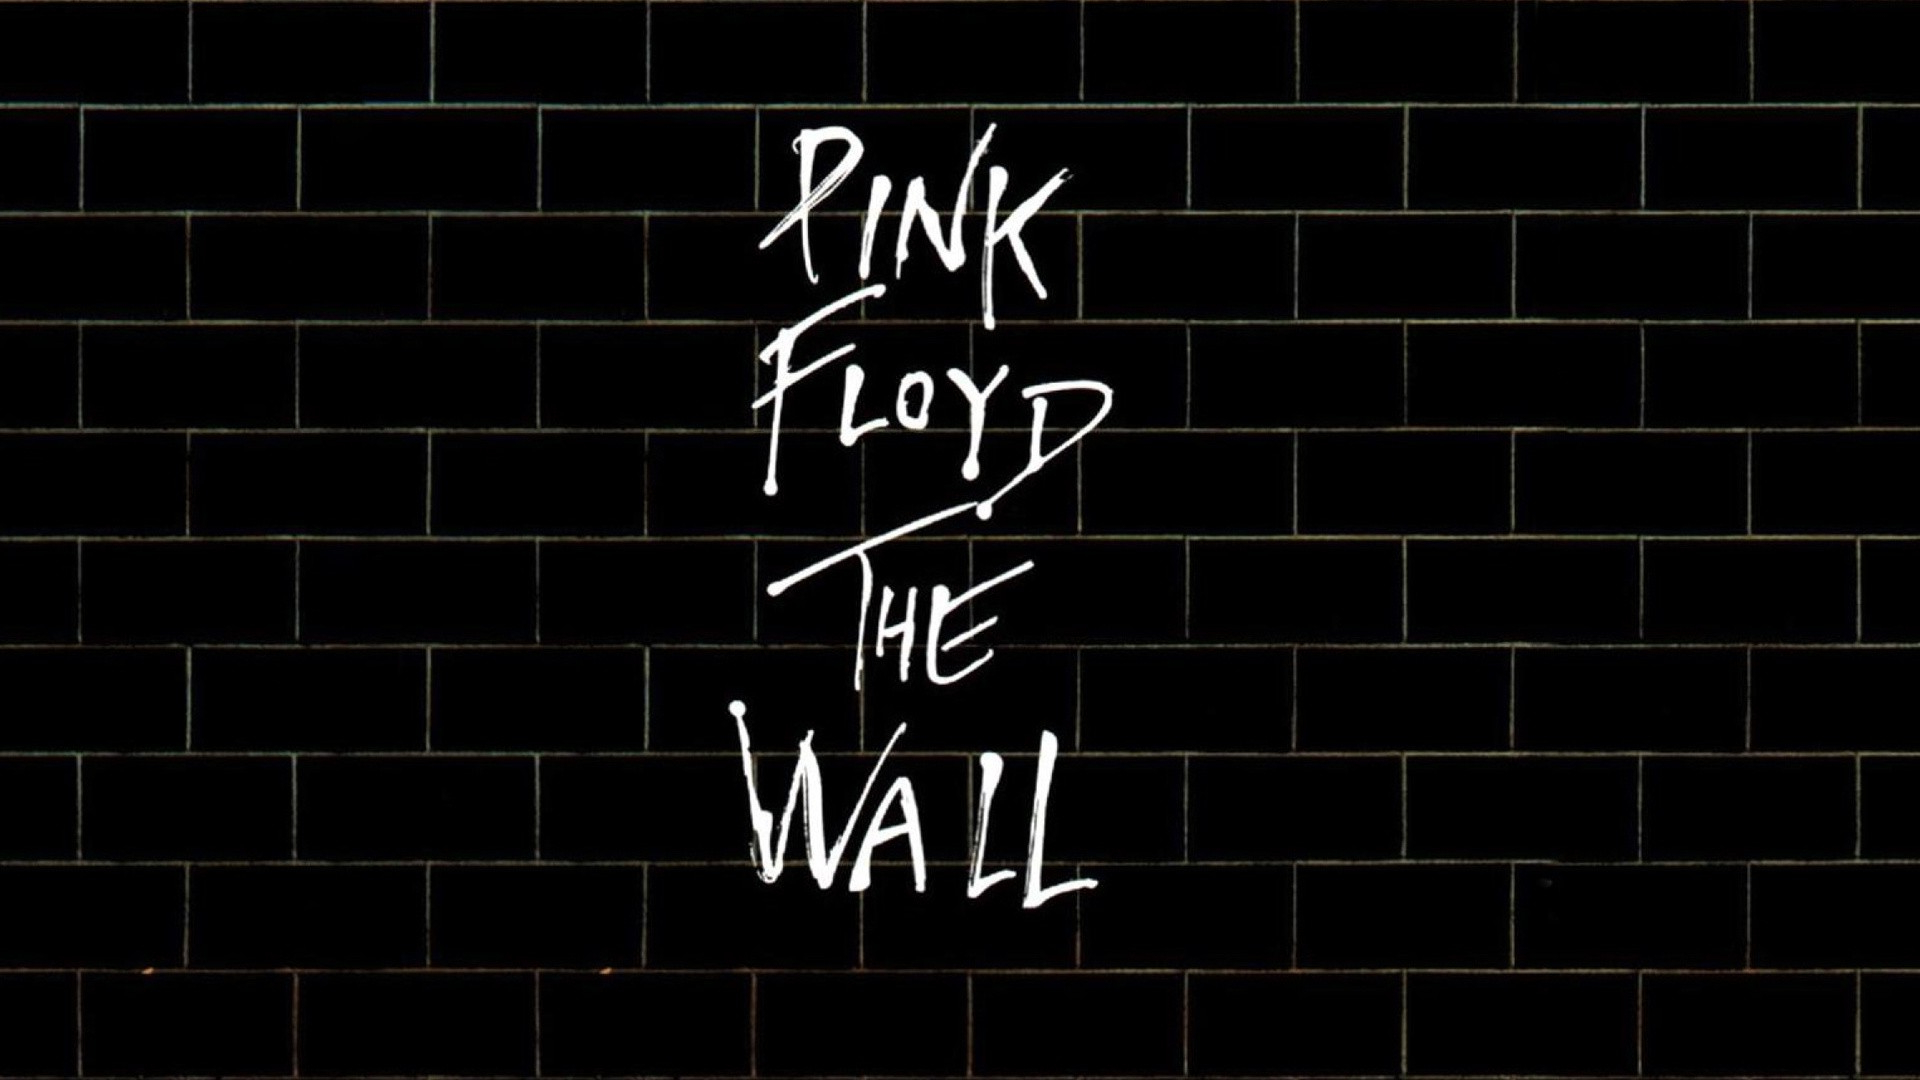 General 1920x1080 Pink Floyd album covers cover art black background rock bands bricks band